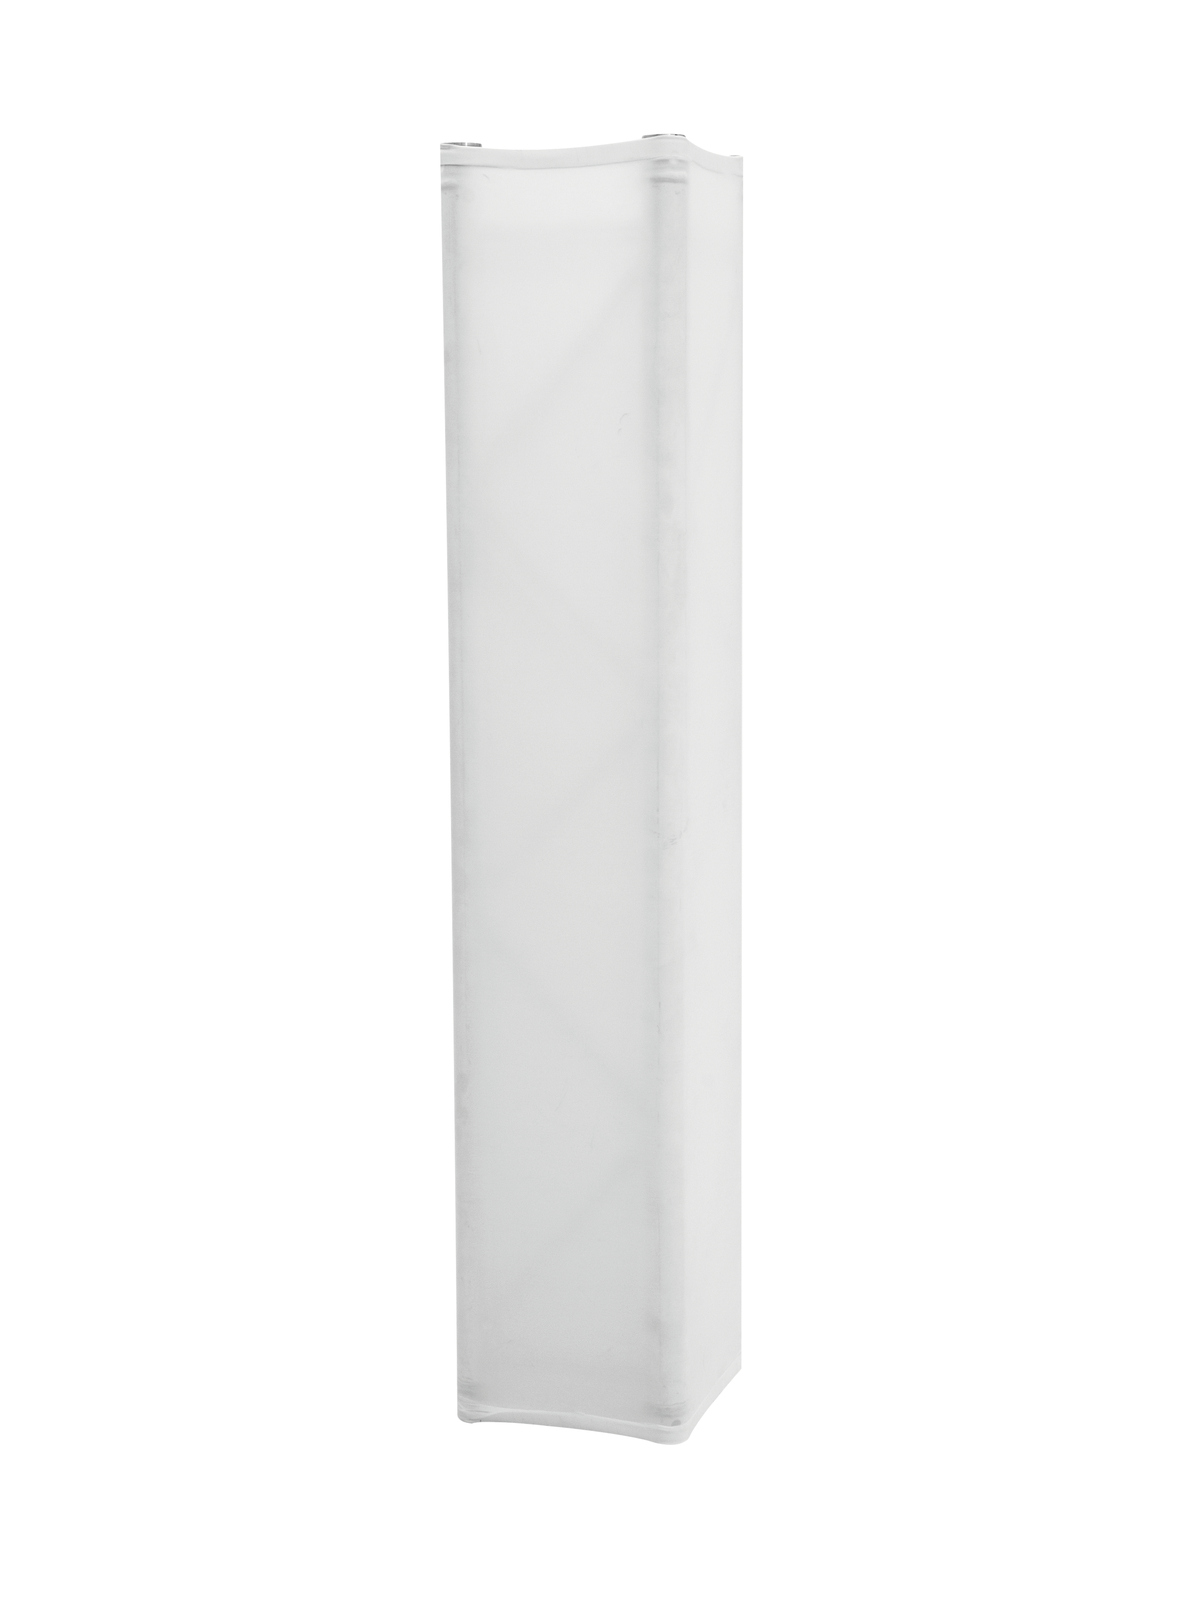 Kryt elastický pro konstrukci 250cm, bílý